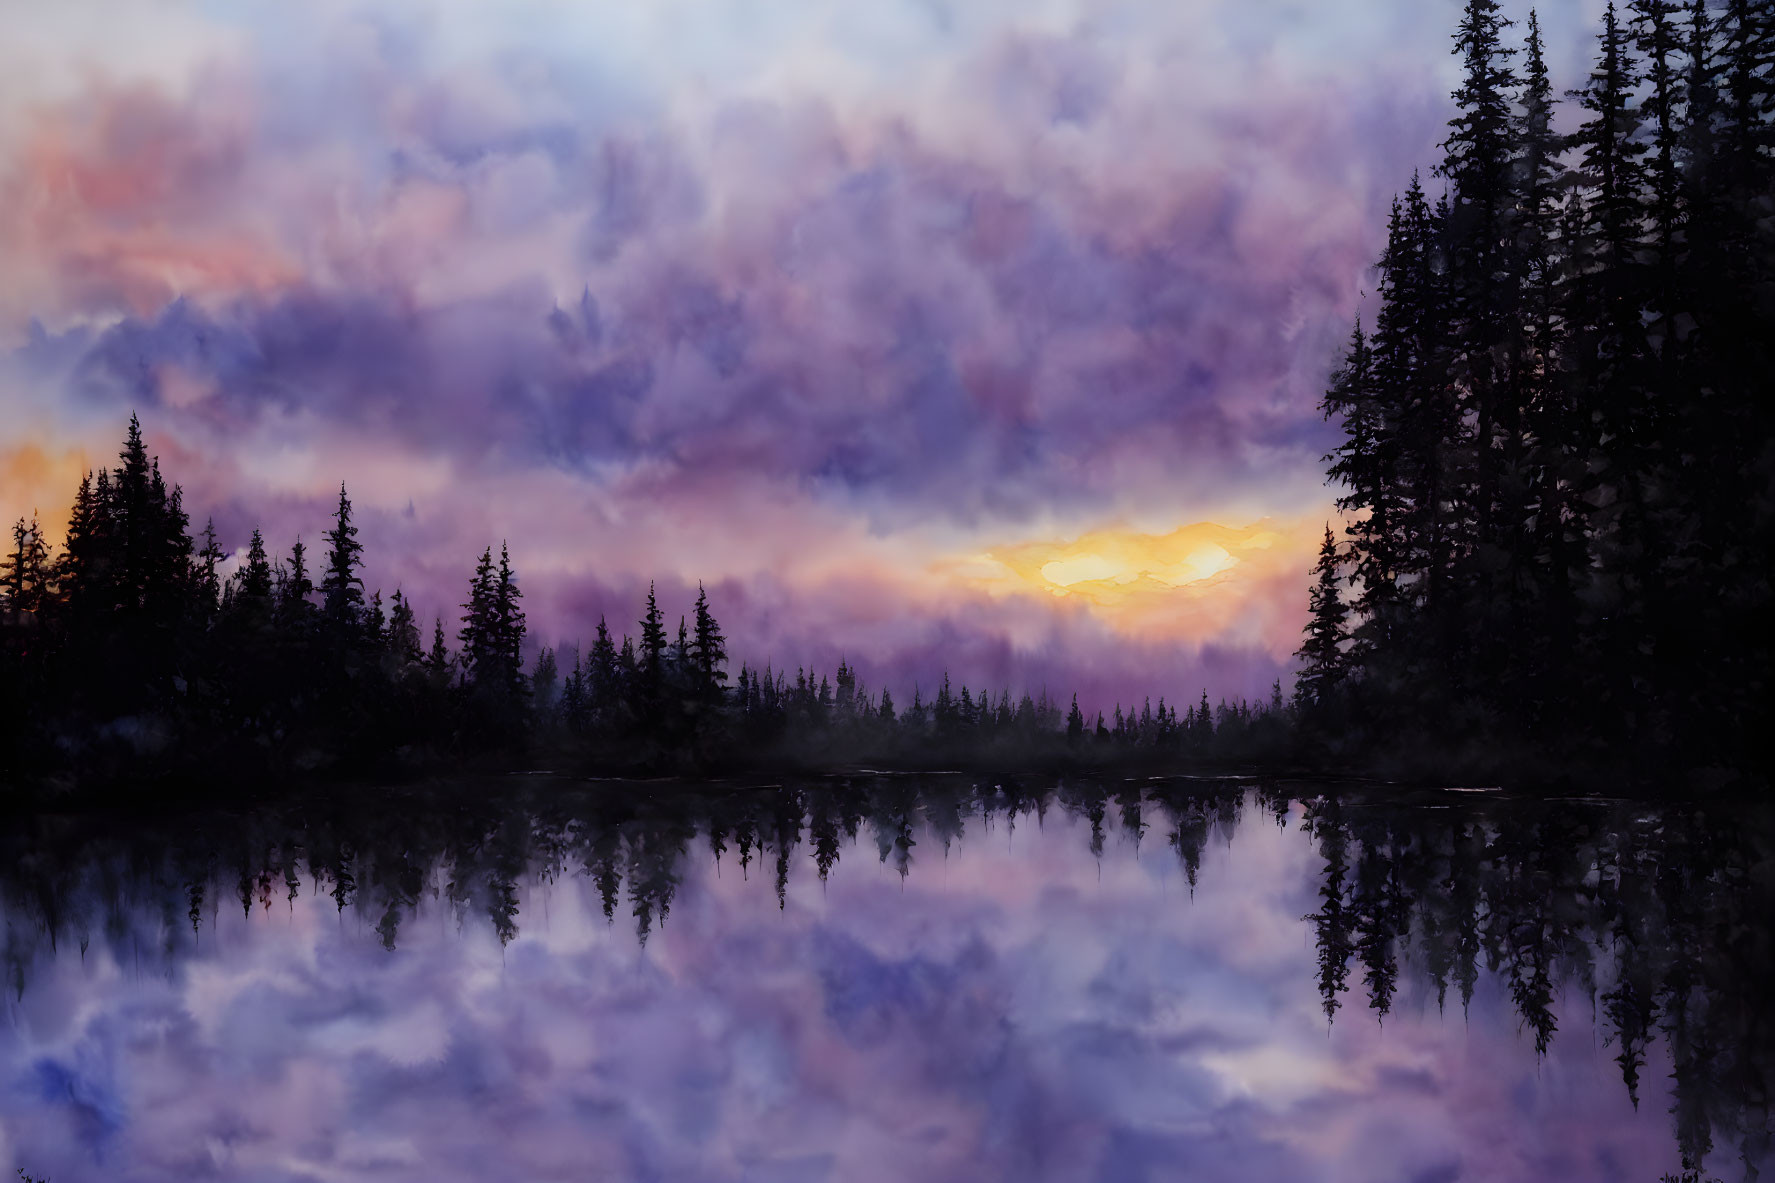 Tranquil landscape: Twilight sky reflected in serene lake